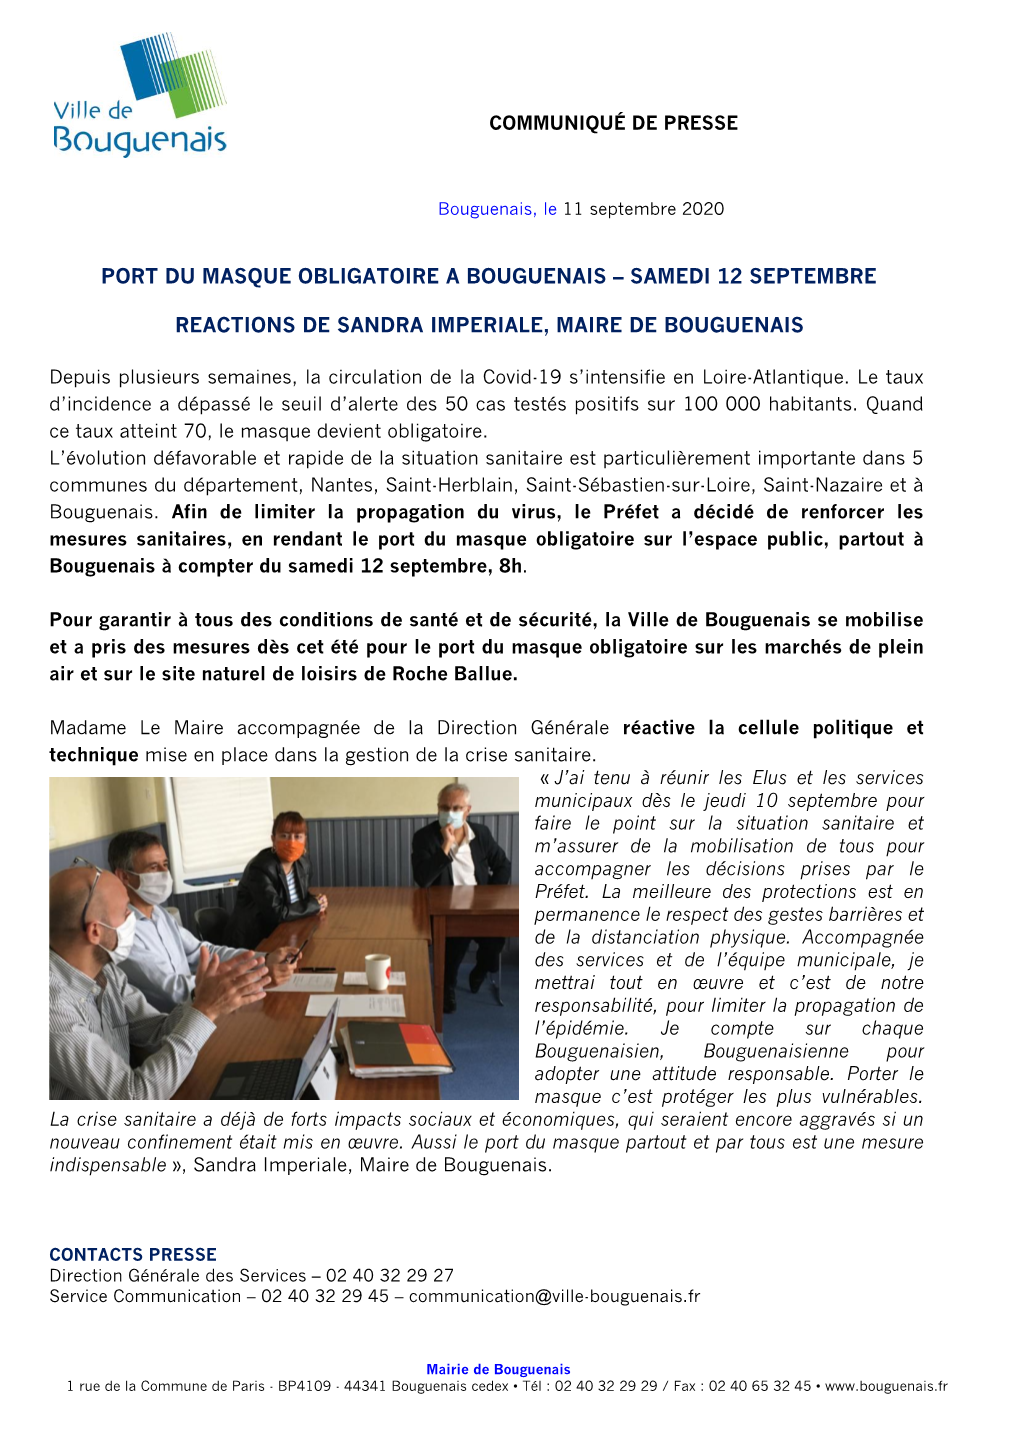 Port Du Masque Obligatoire a Bouguenais – Samedi 12 Septembre